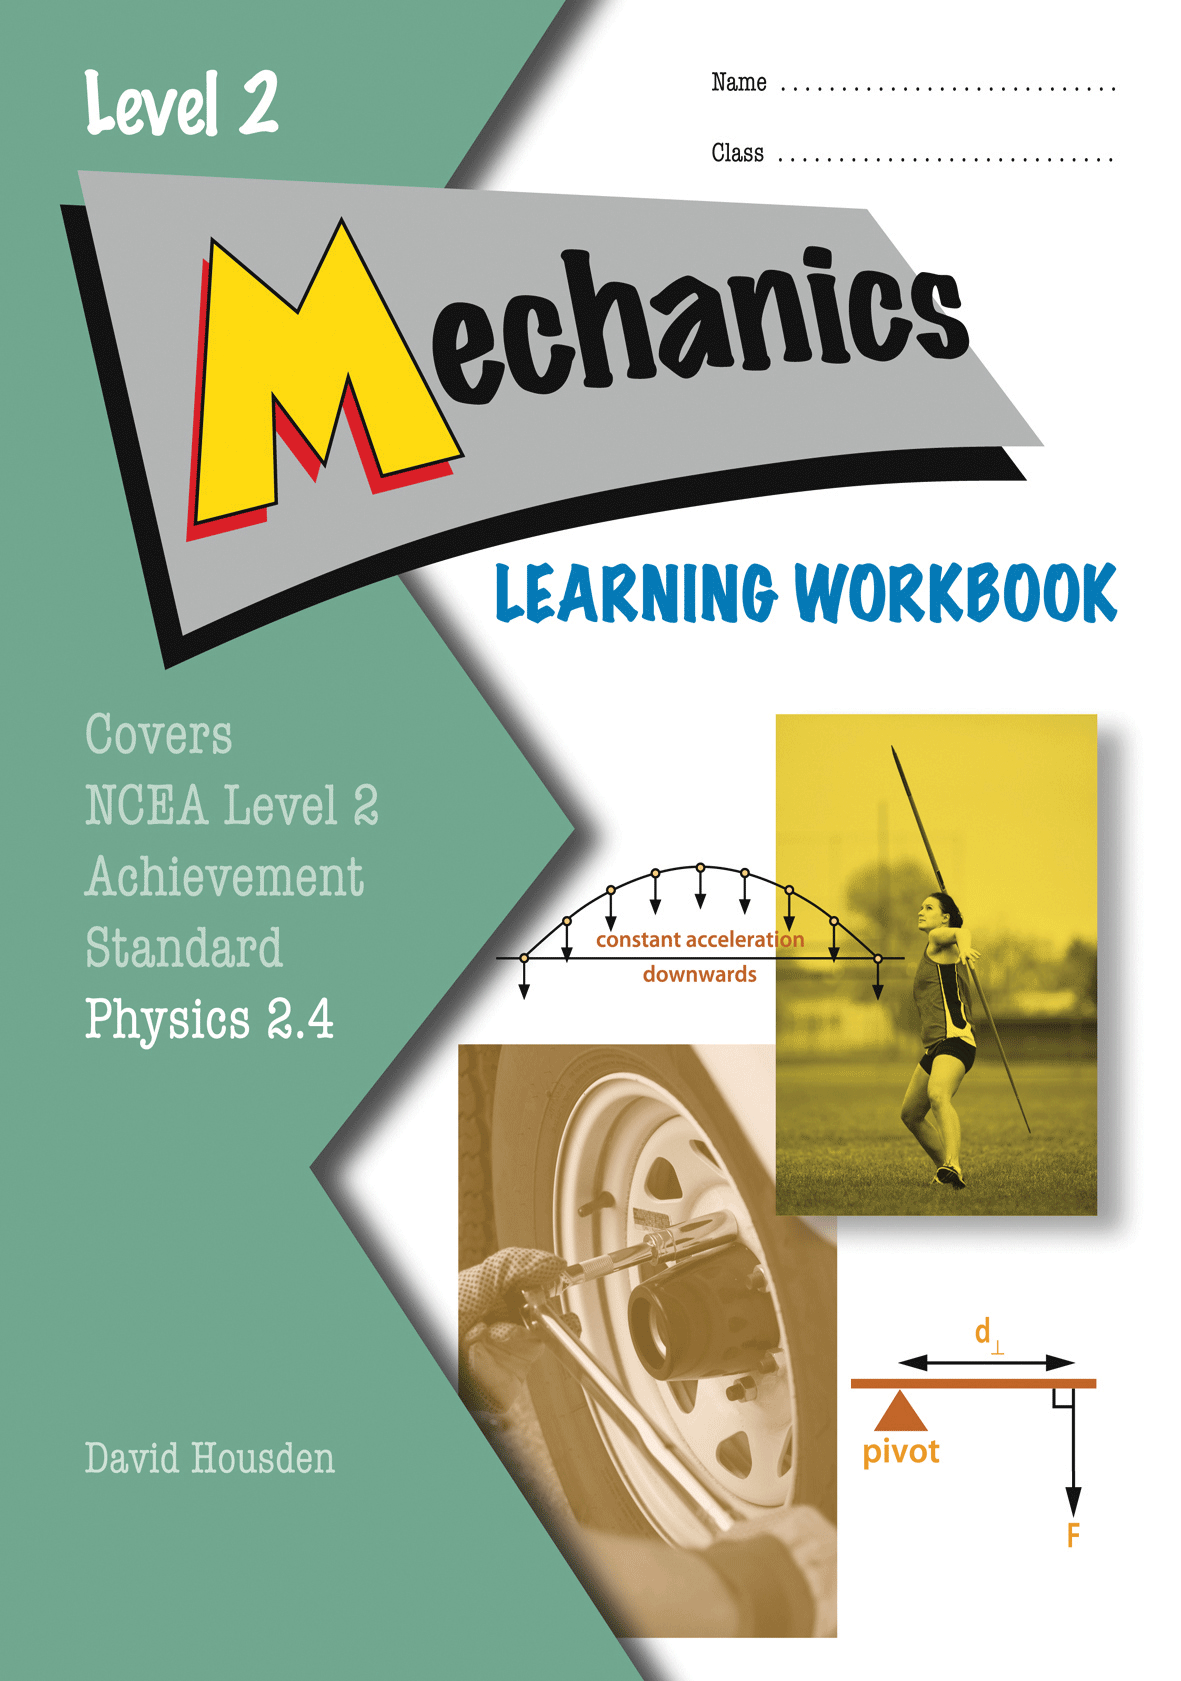 Level 2 Mechanics 2.4 Learning Workbook